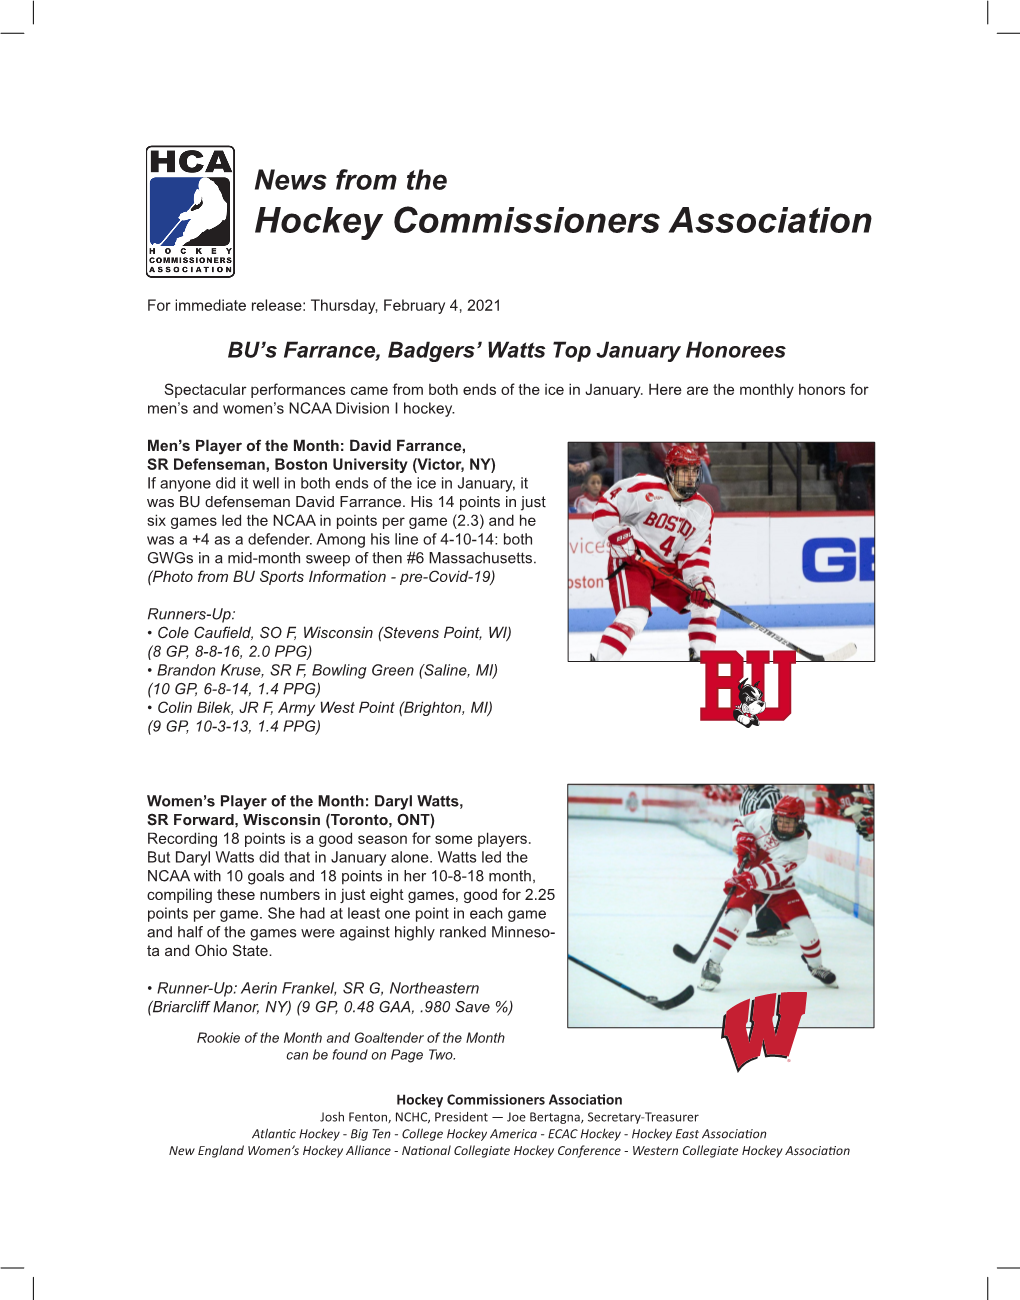 Hockey Commissioners Association